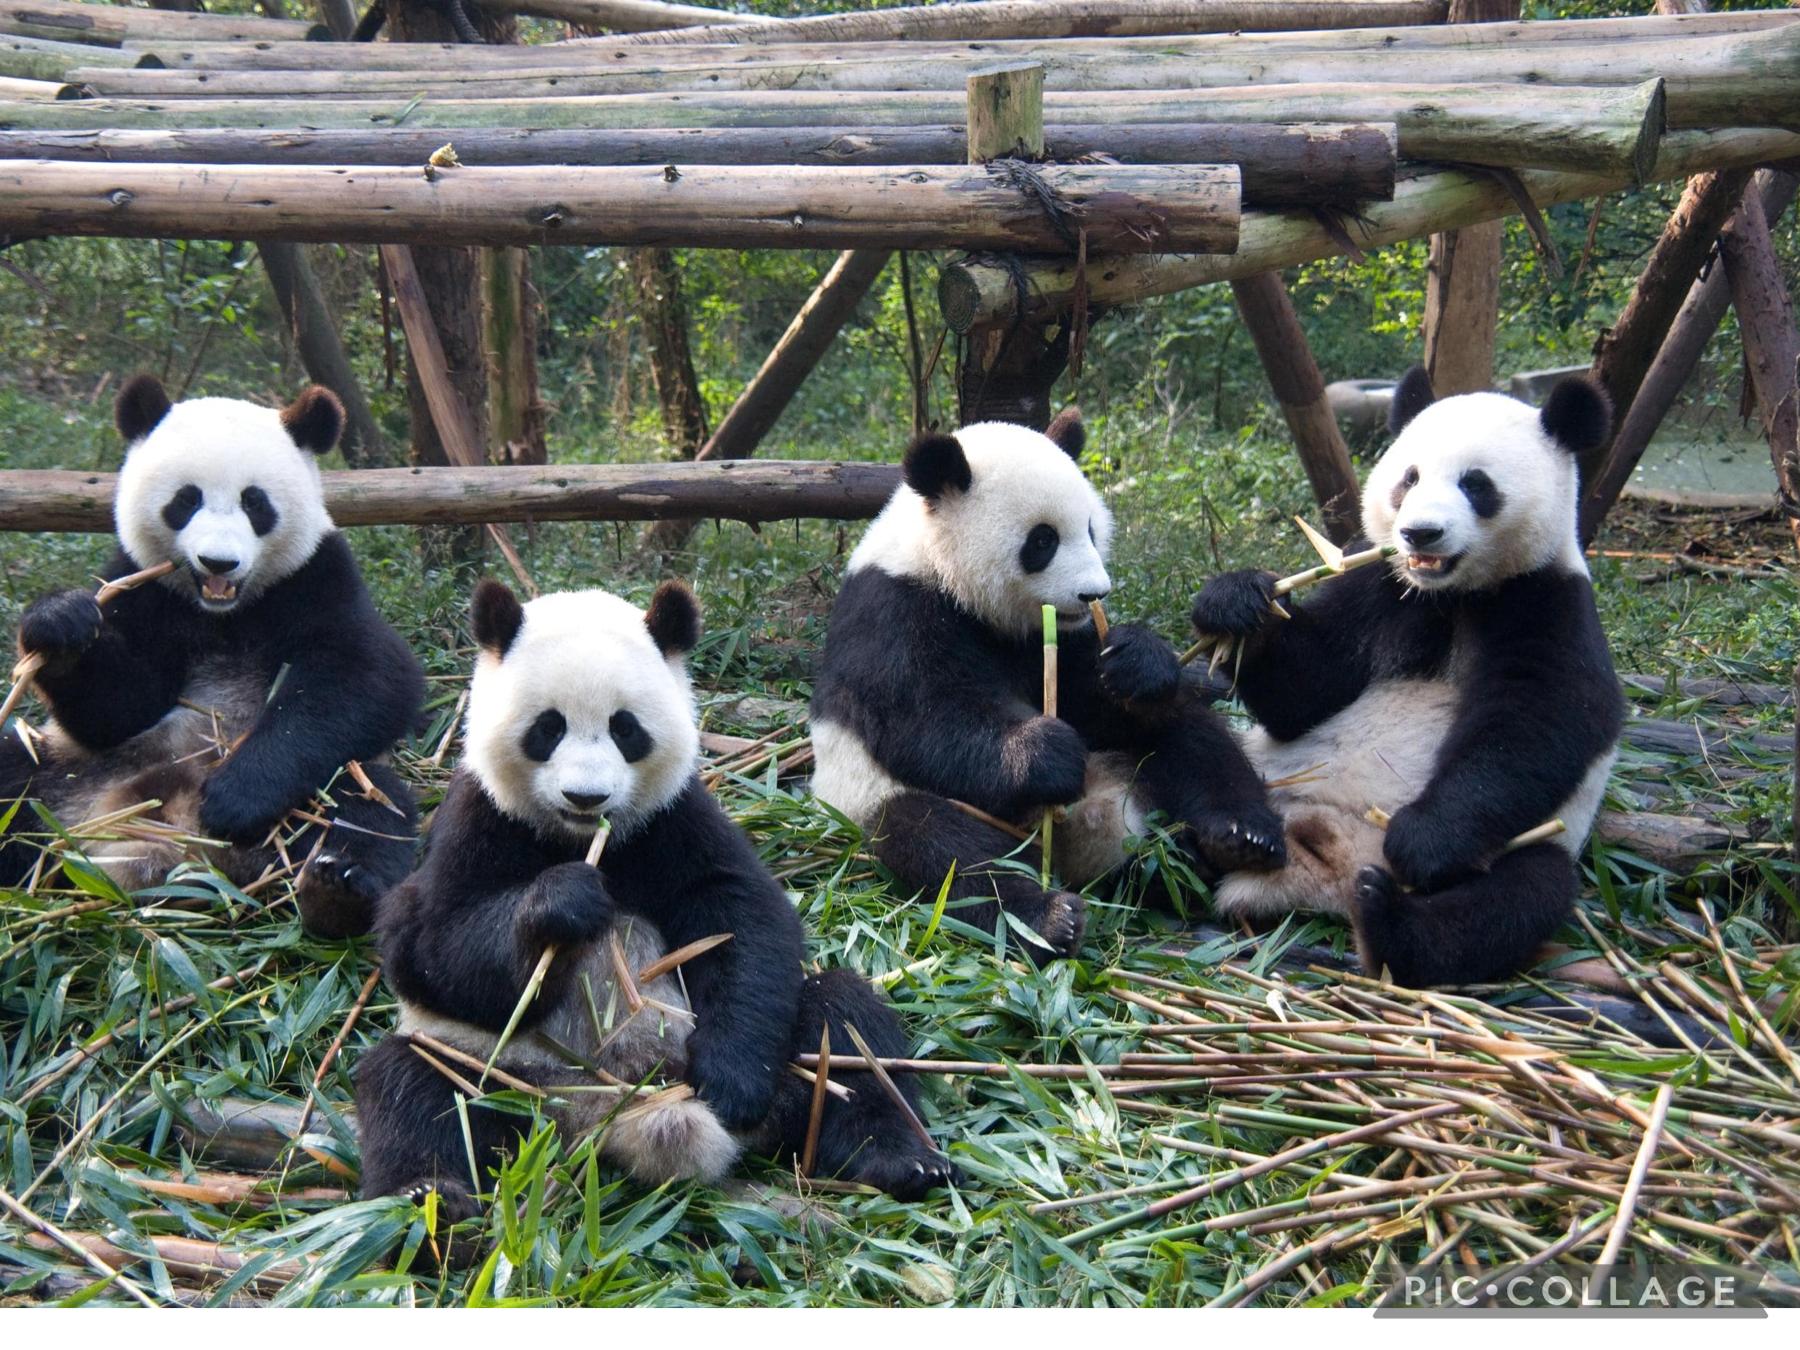 Pandas so cute